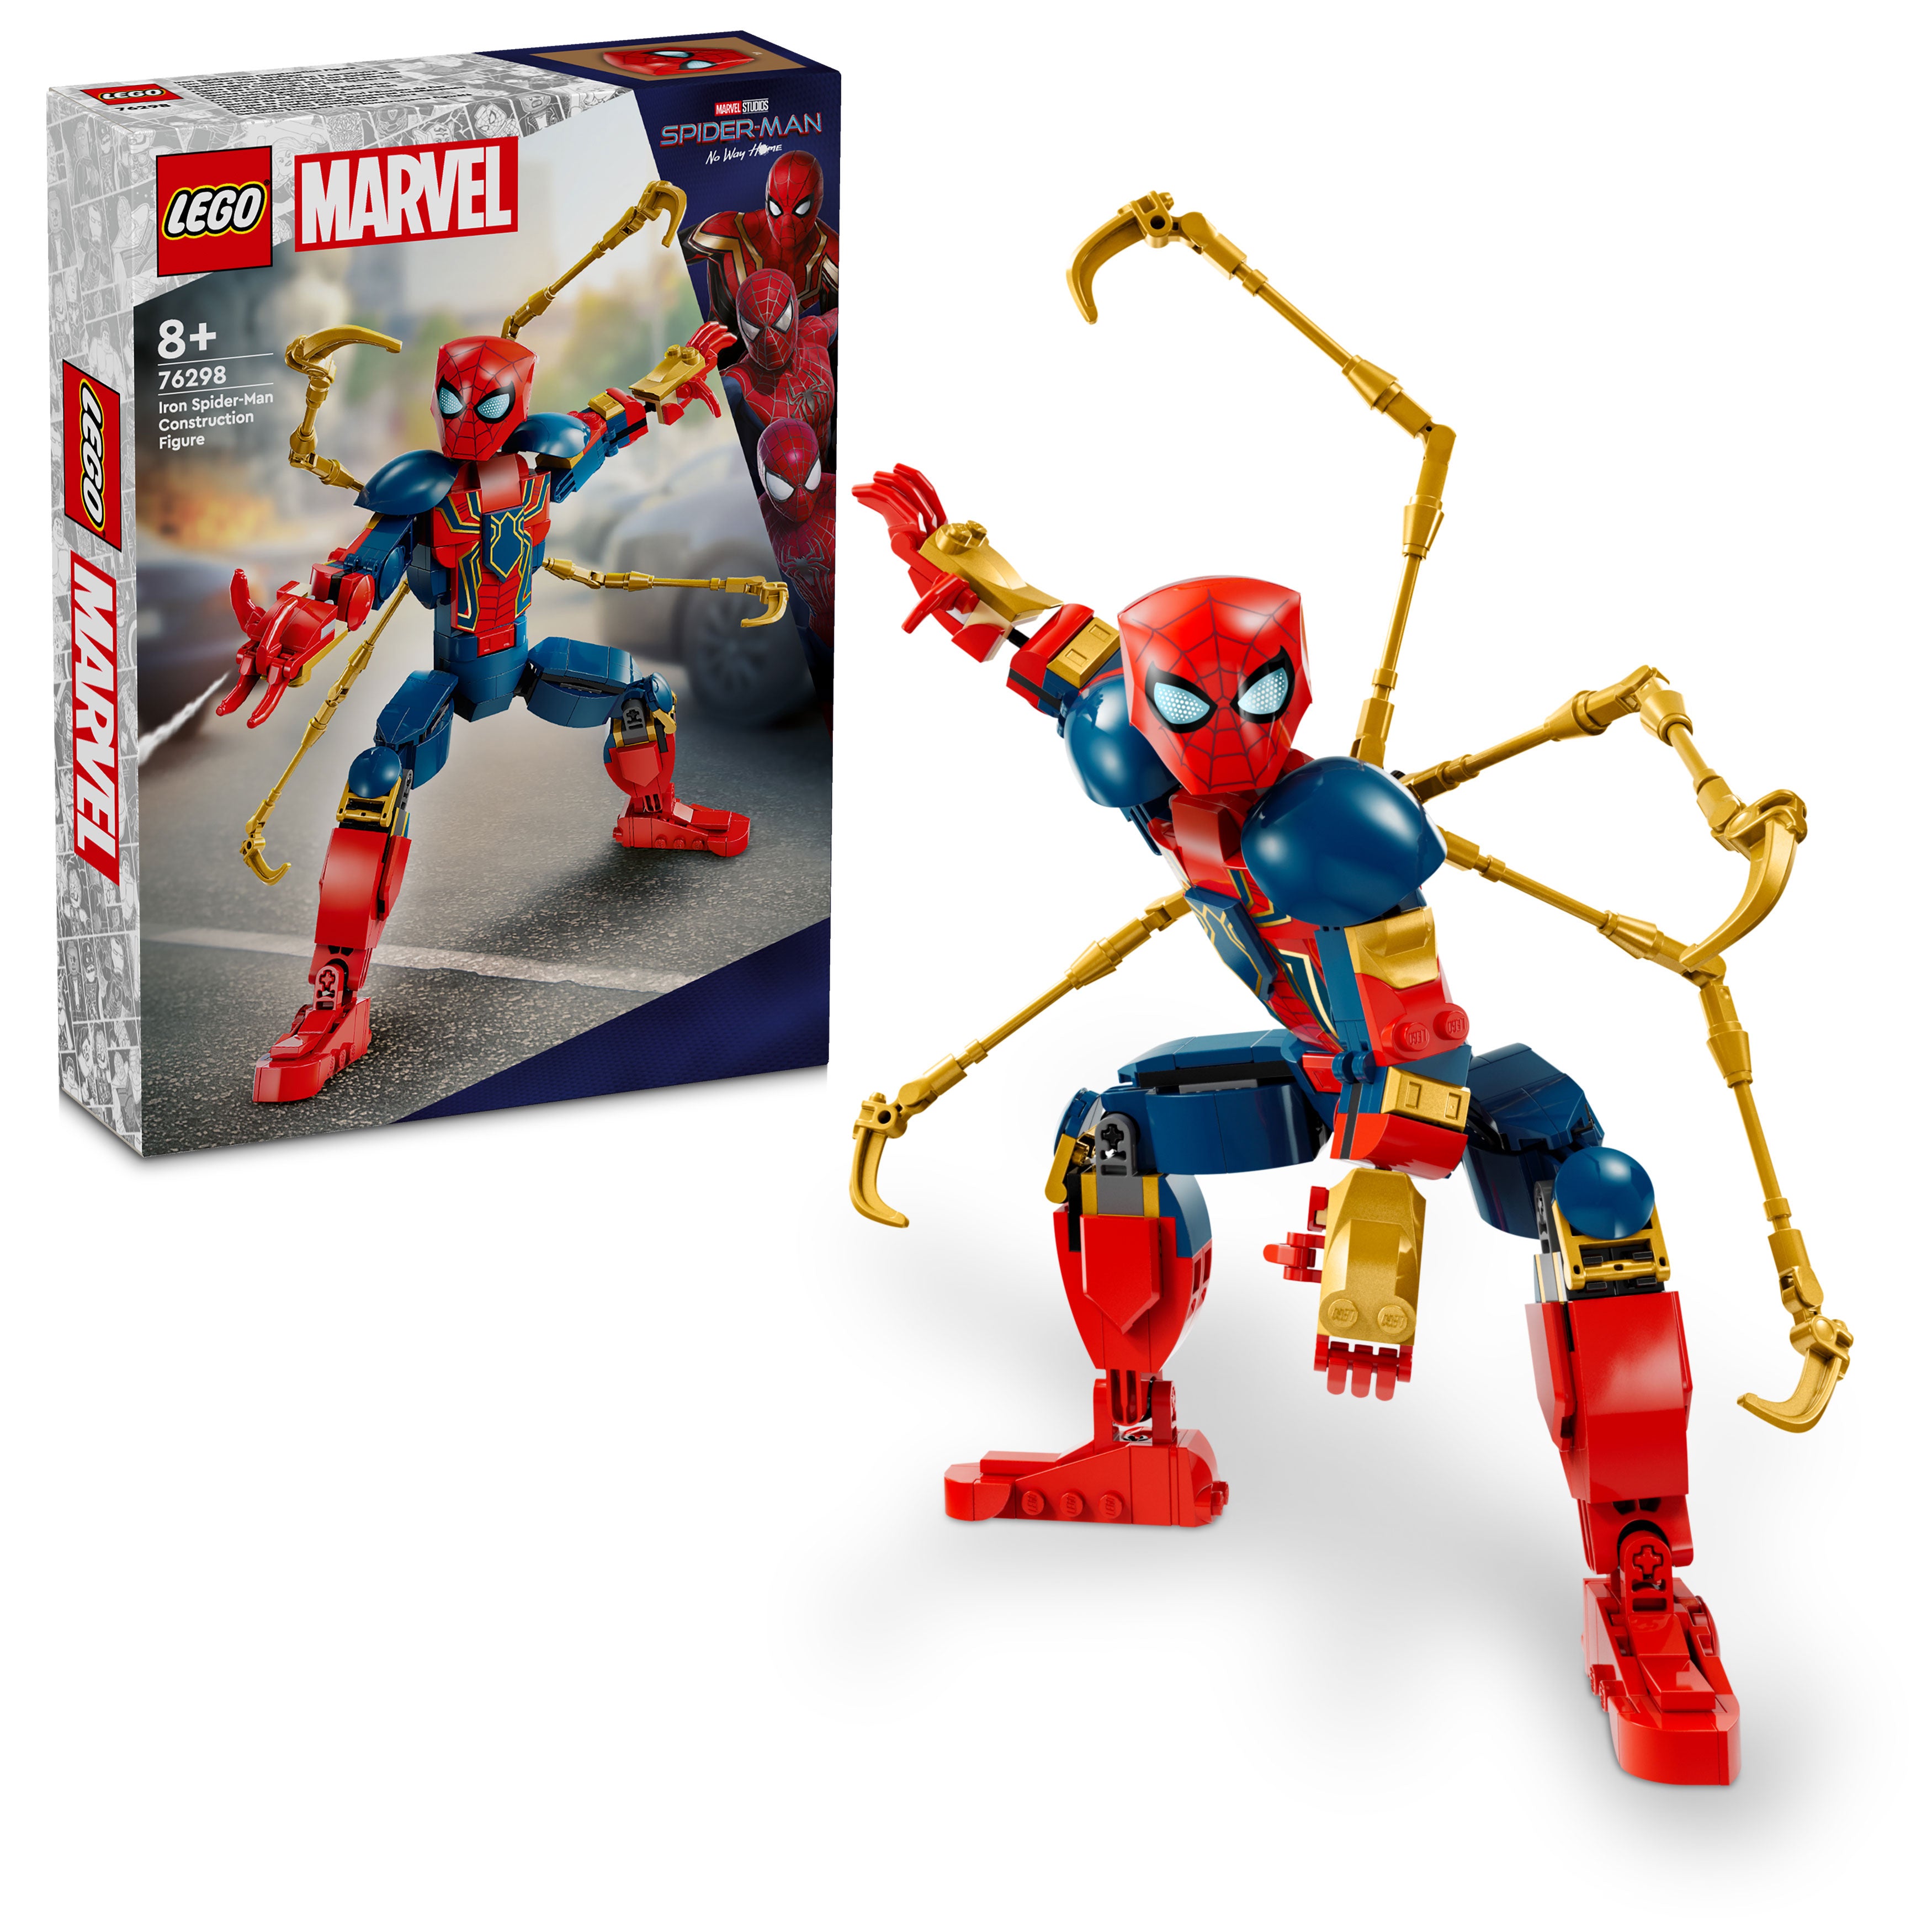 Lego 76298 Iron Spider-Man Construction Figure